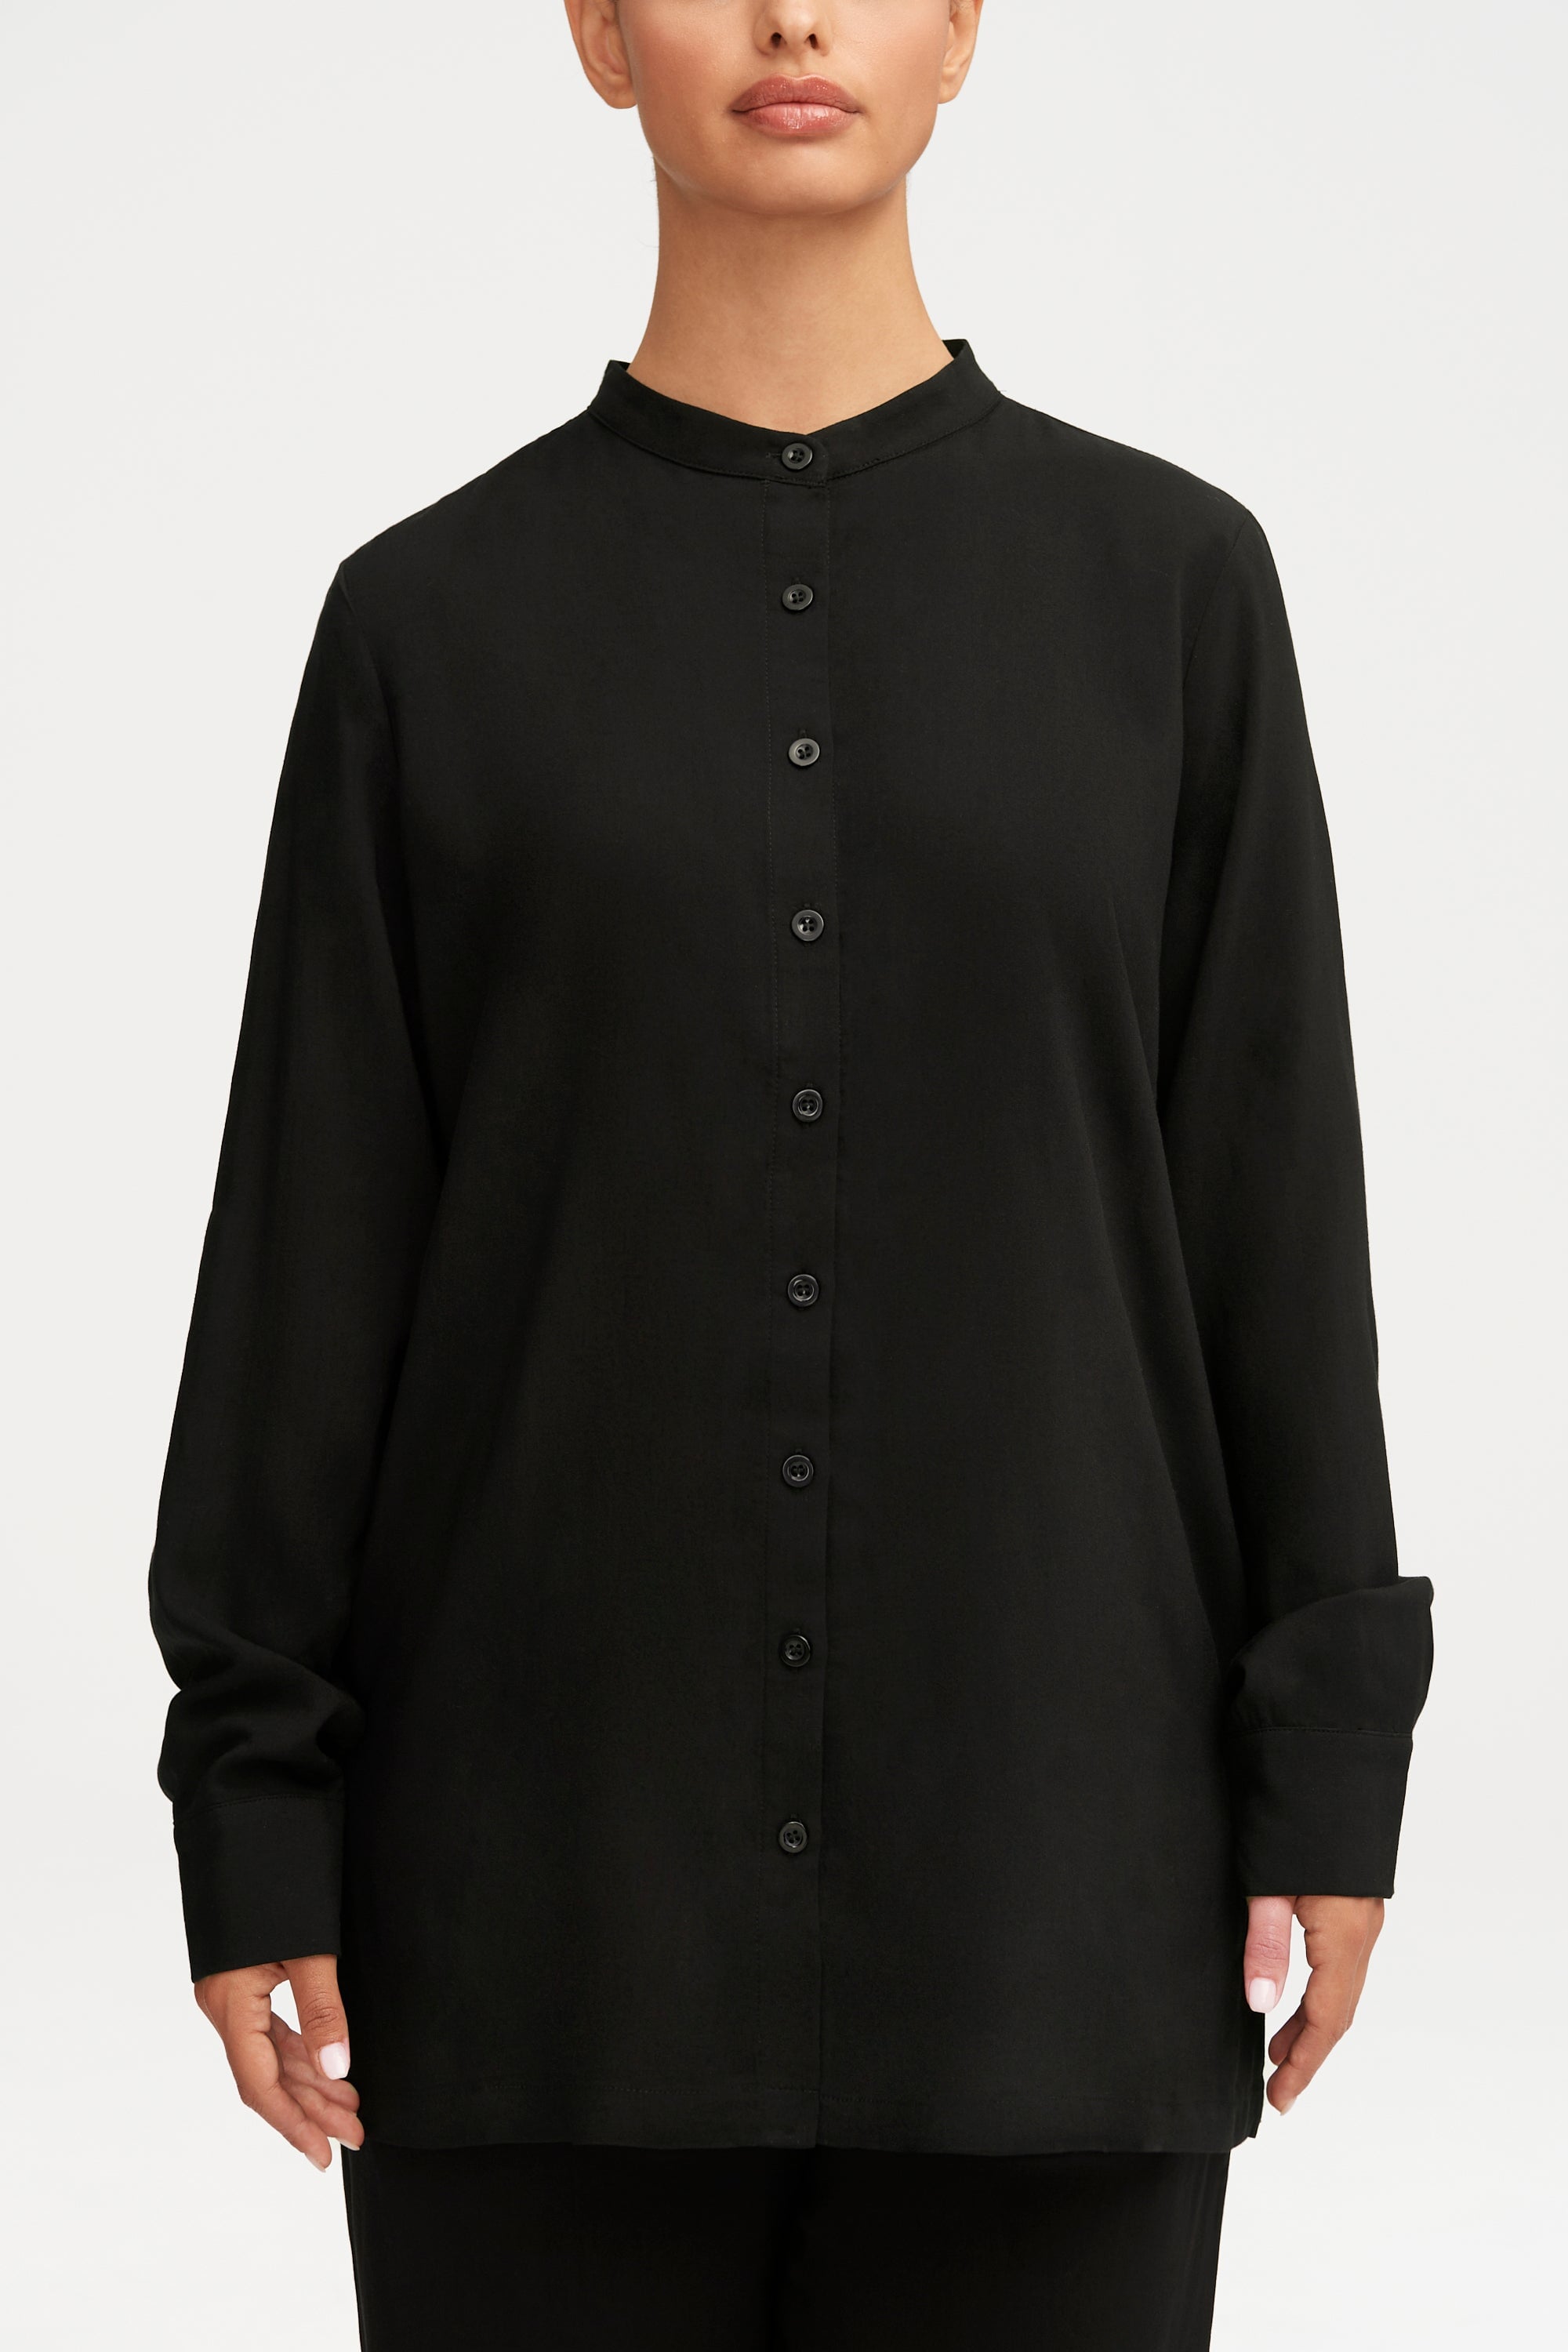 Alina Button Down Side Slit Top - Black Clothing saigonodysseyhotel 